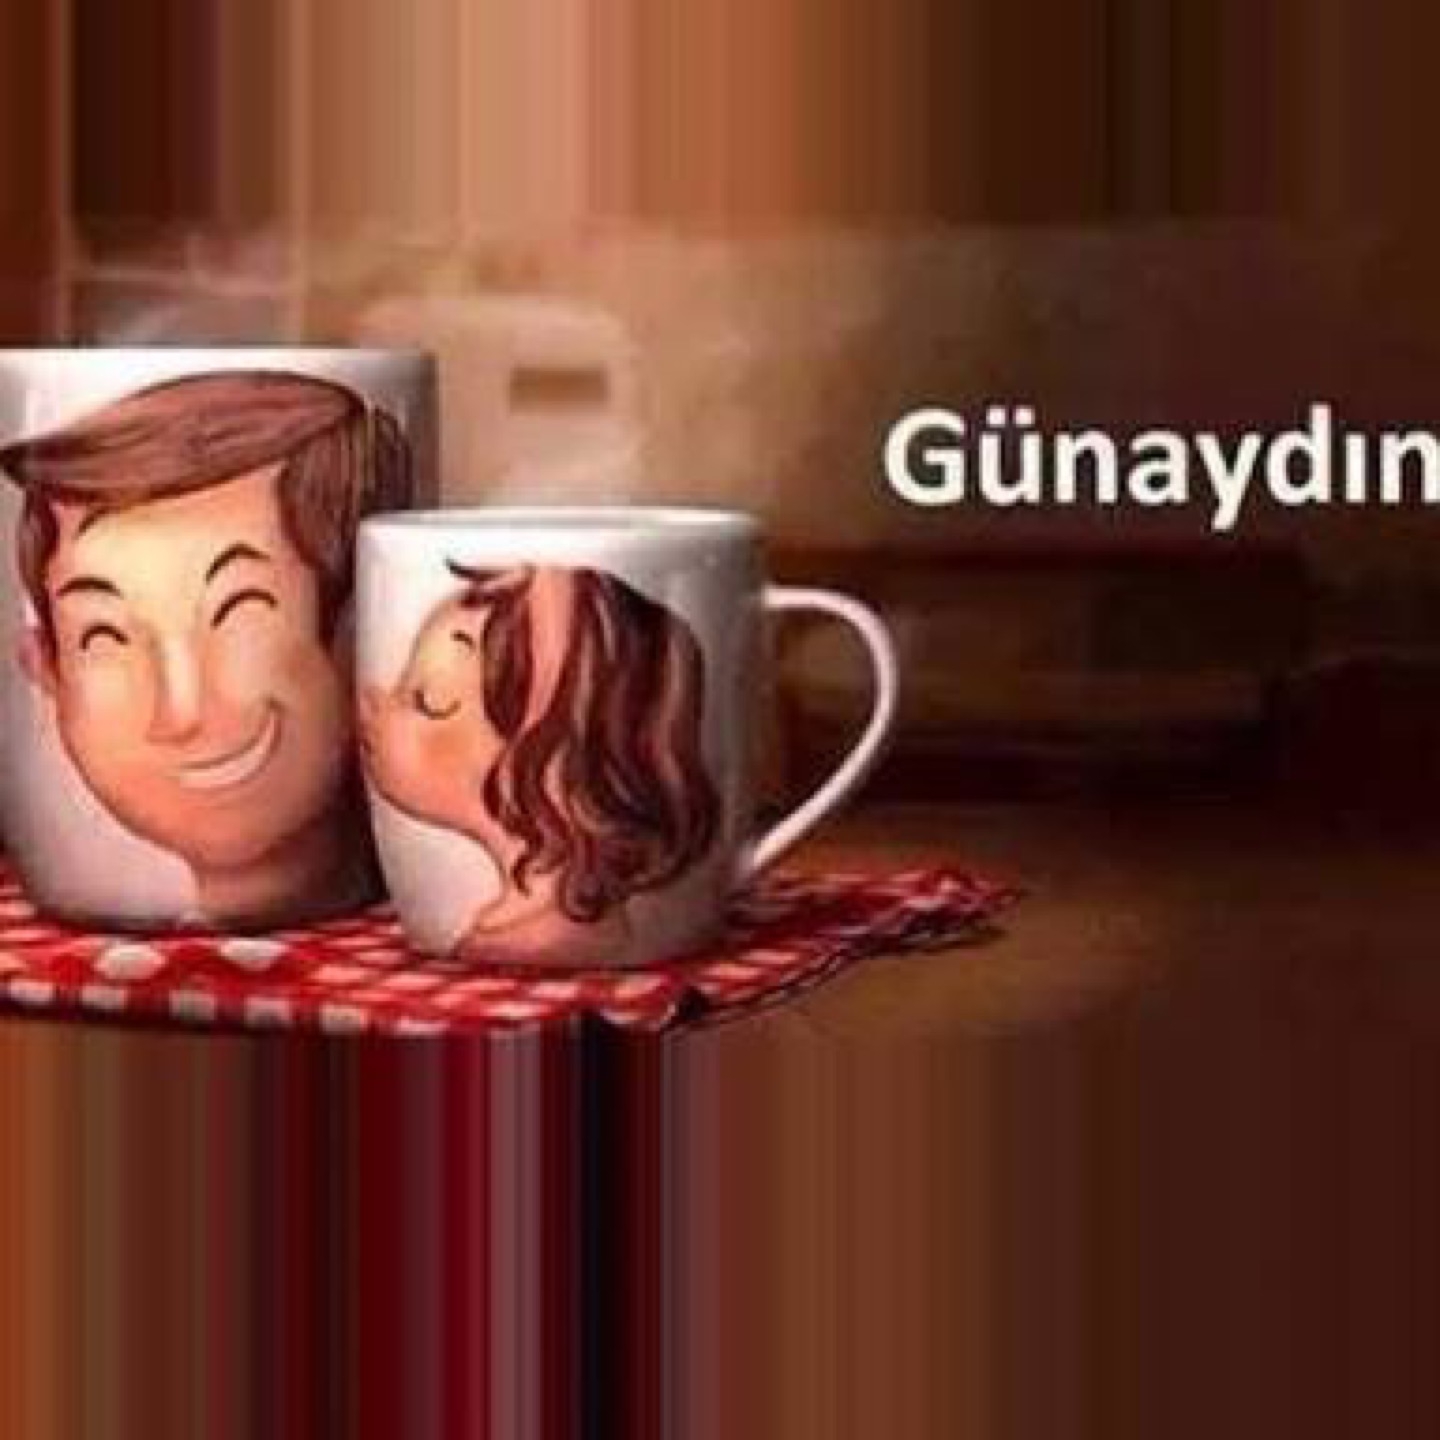 Доброе утро картинки на турецком языке мужчине. Открытки с добрым утром на турецком. Открытки Günaydin. Доброе утро дорогой по турецки. Открытки на турецком добрый день.